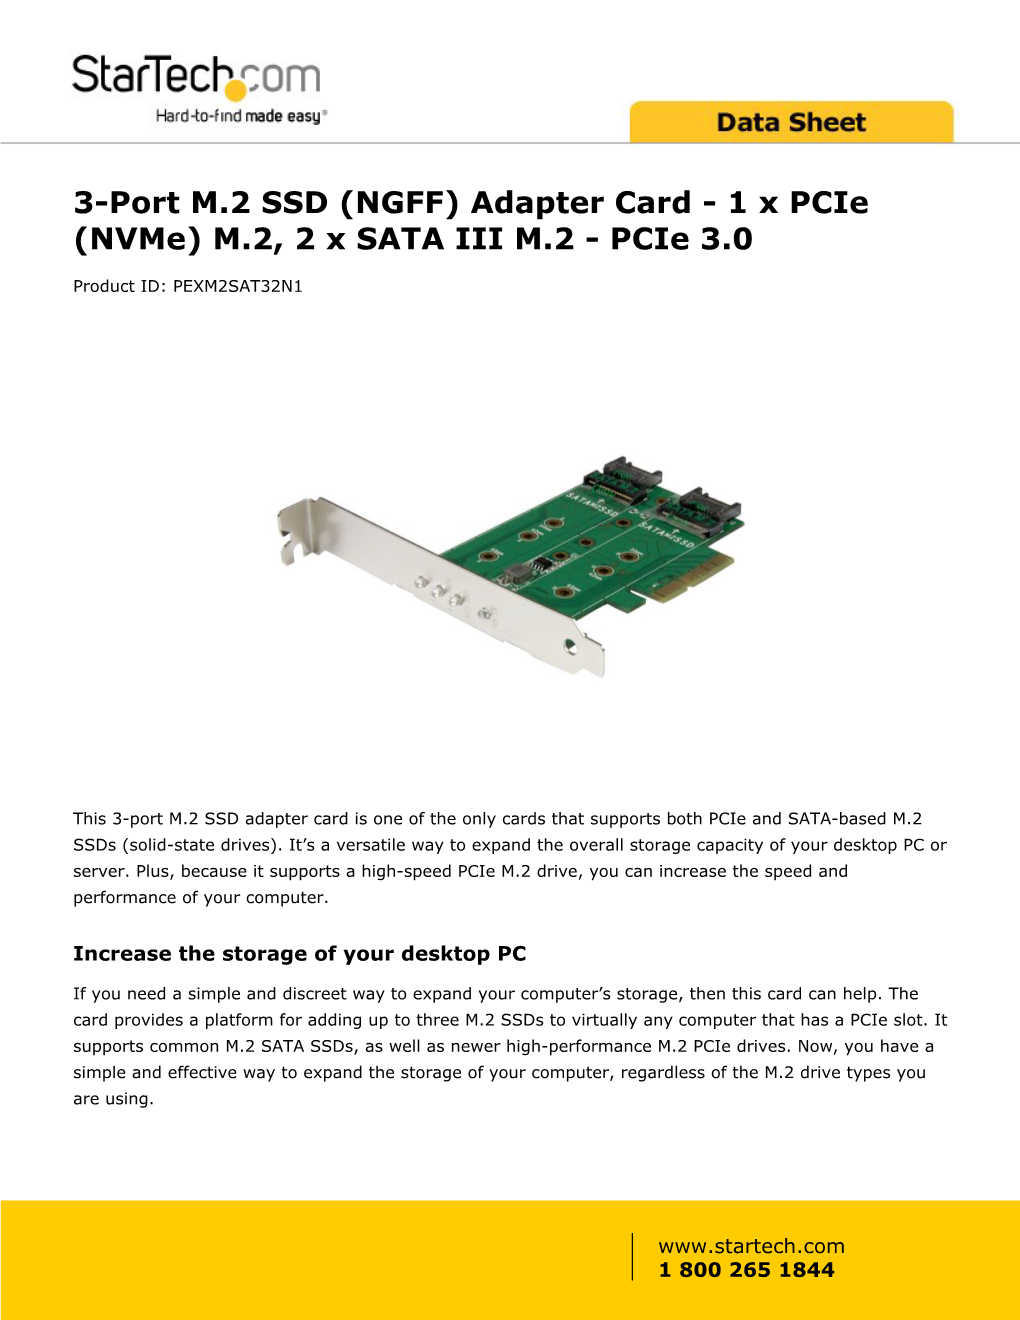 3-Port M.2 SSD (NGFF) Adapter Card - 1 X Pcie (Nvme) M.2, 2 X SATA III M.2 - Pcie 3.0